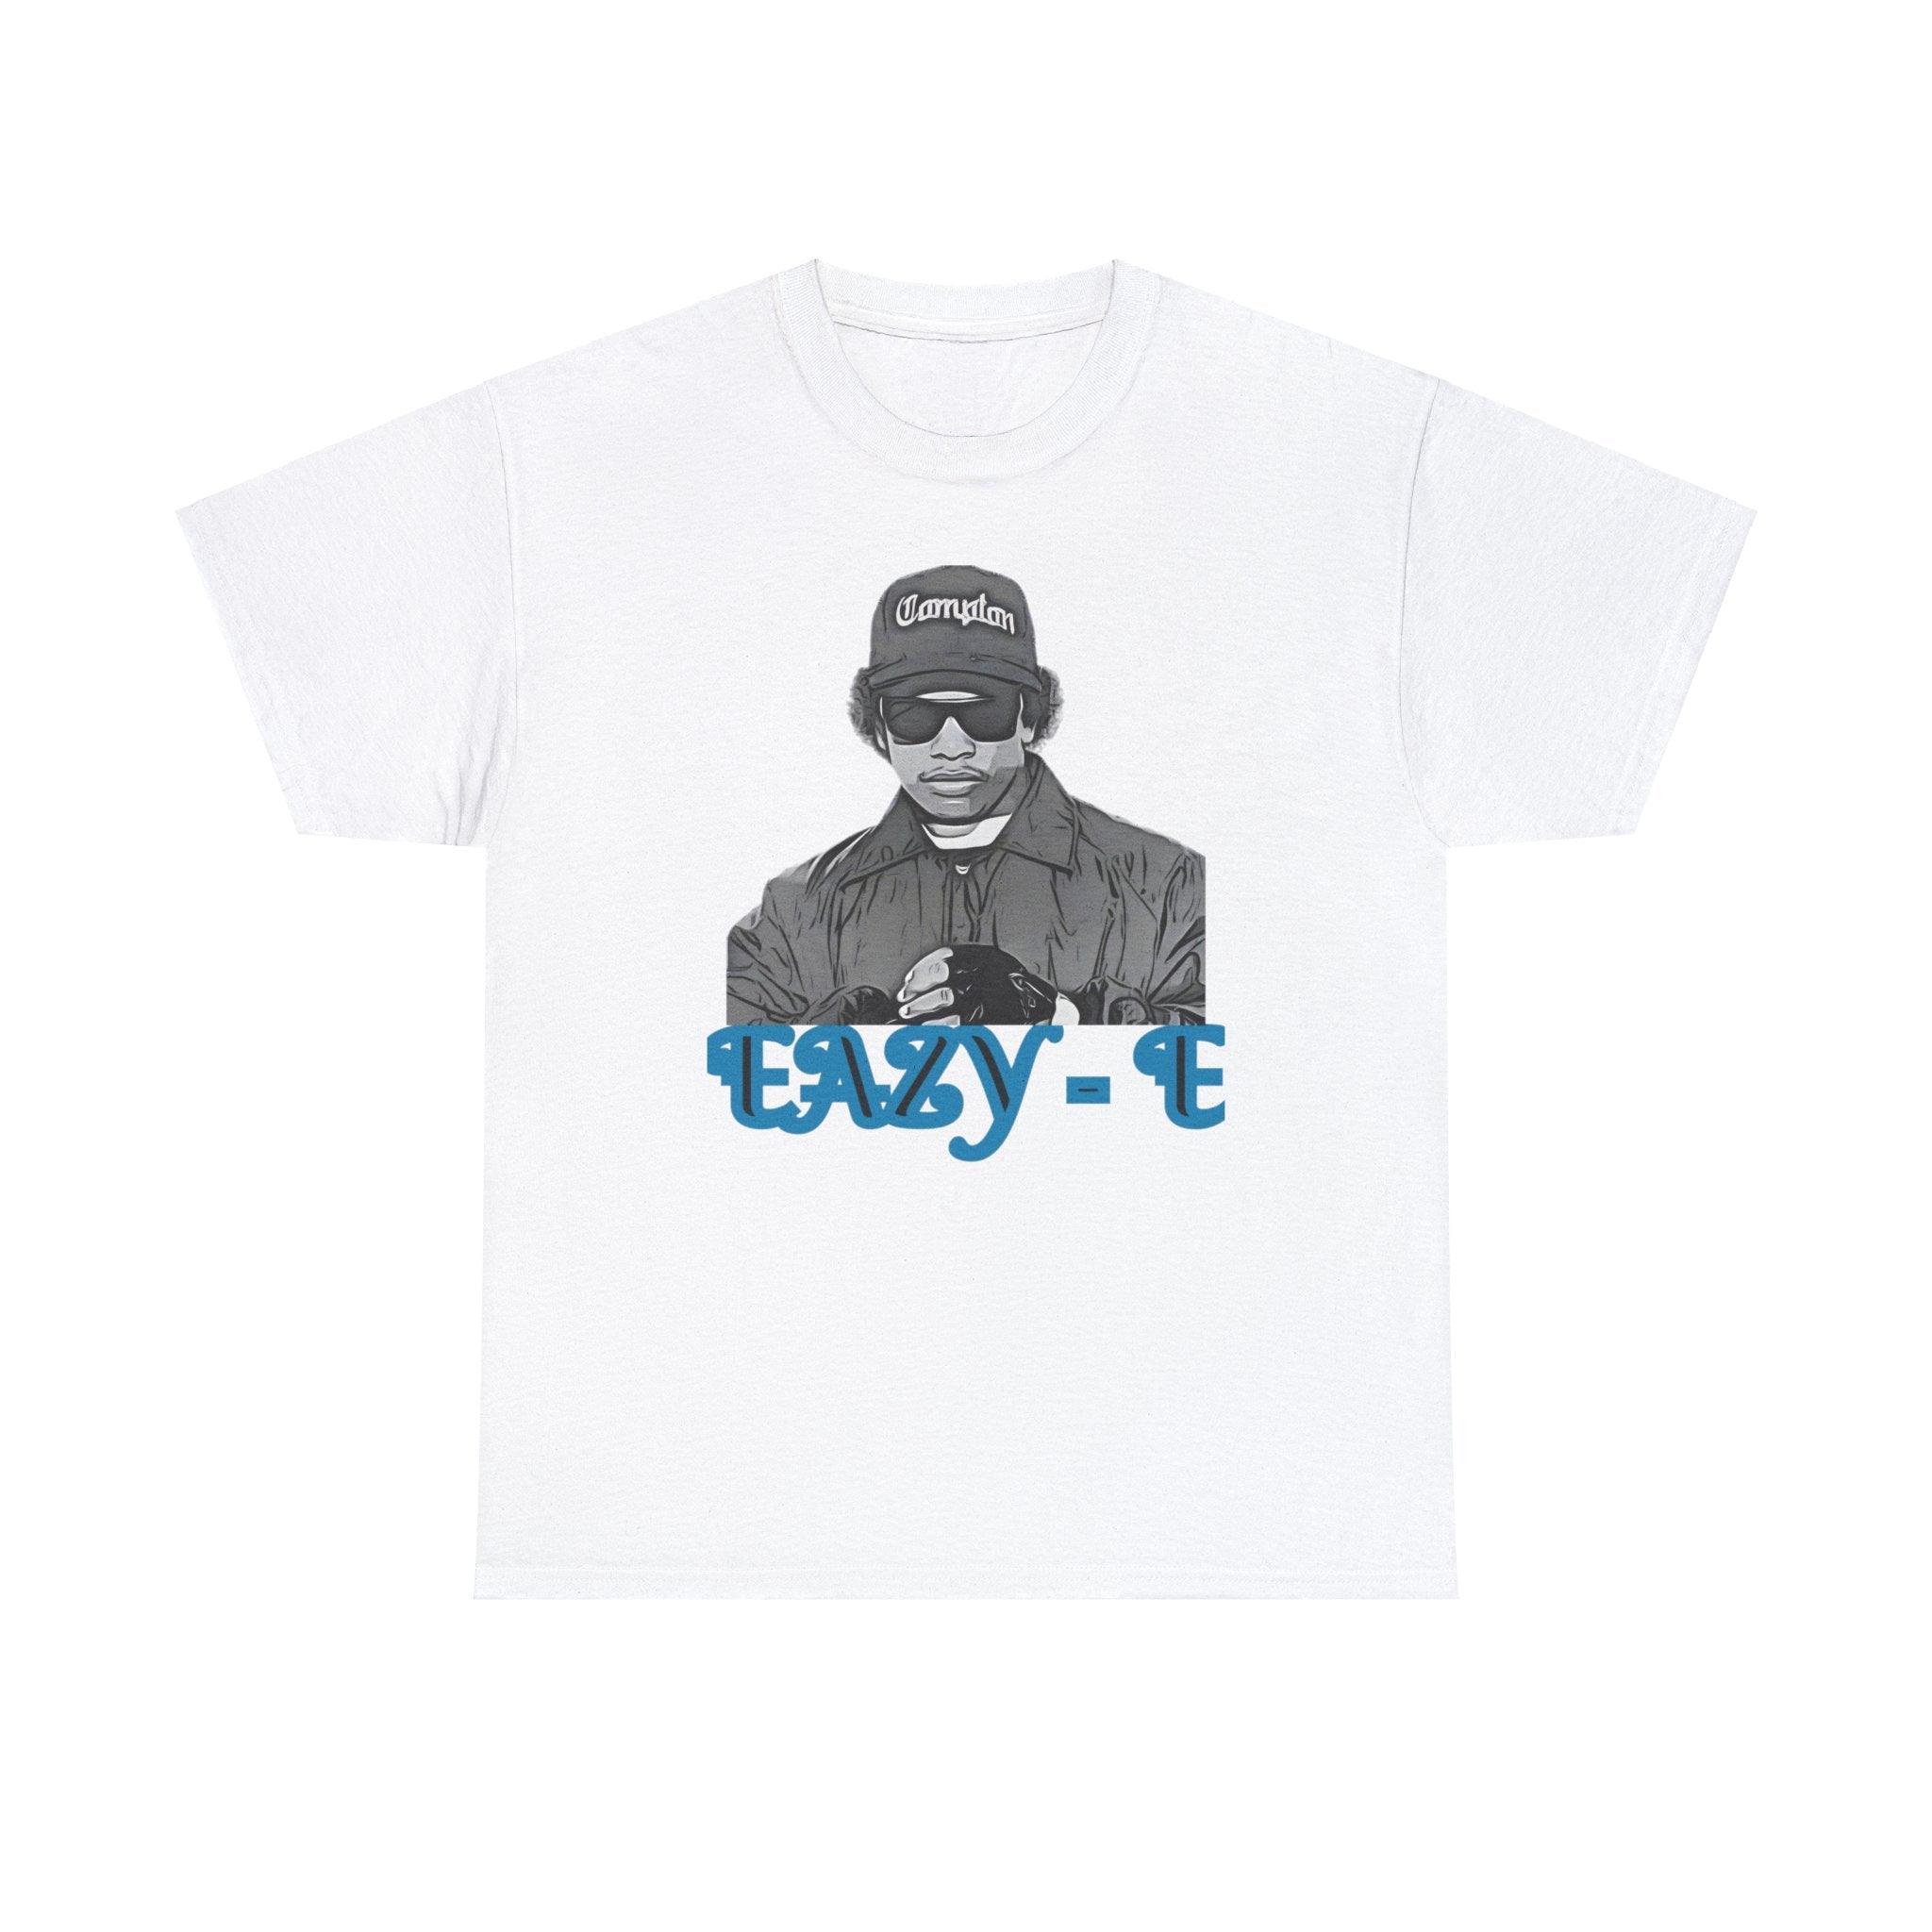 Eazy E t-shirt - Epic Shirts 403